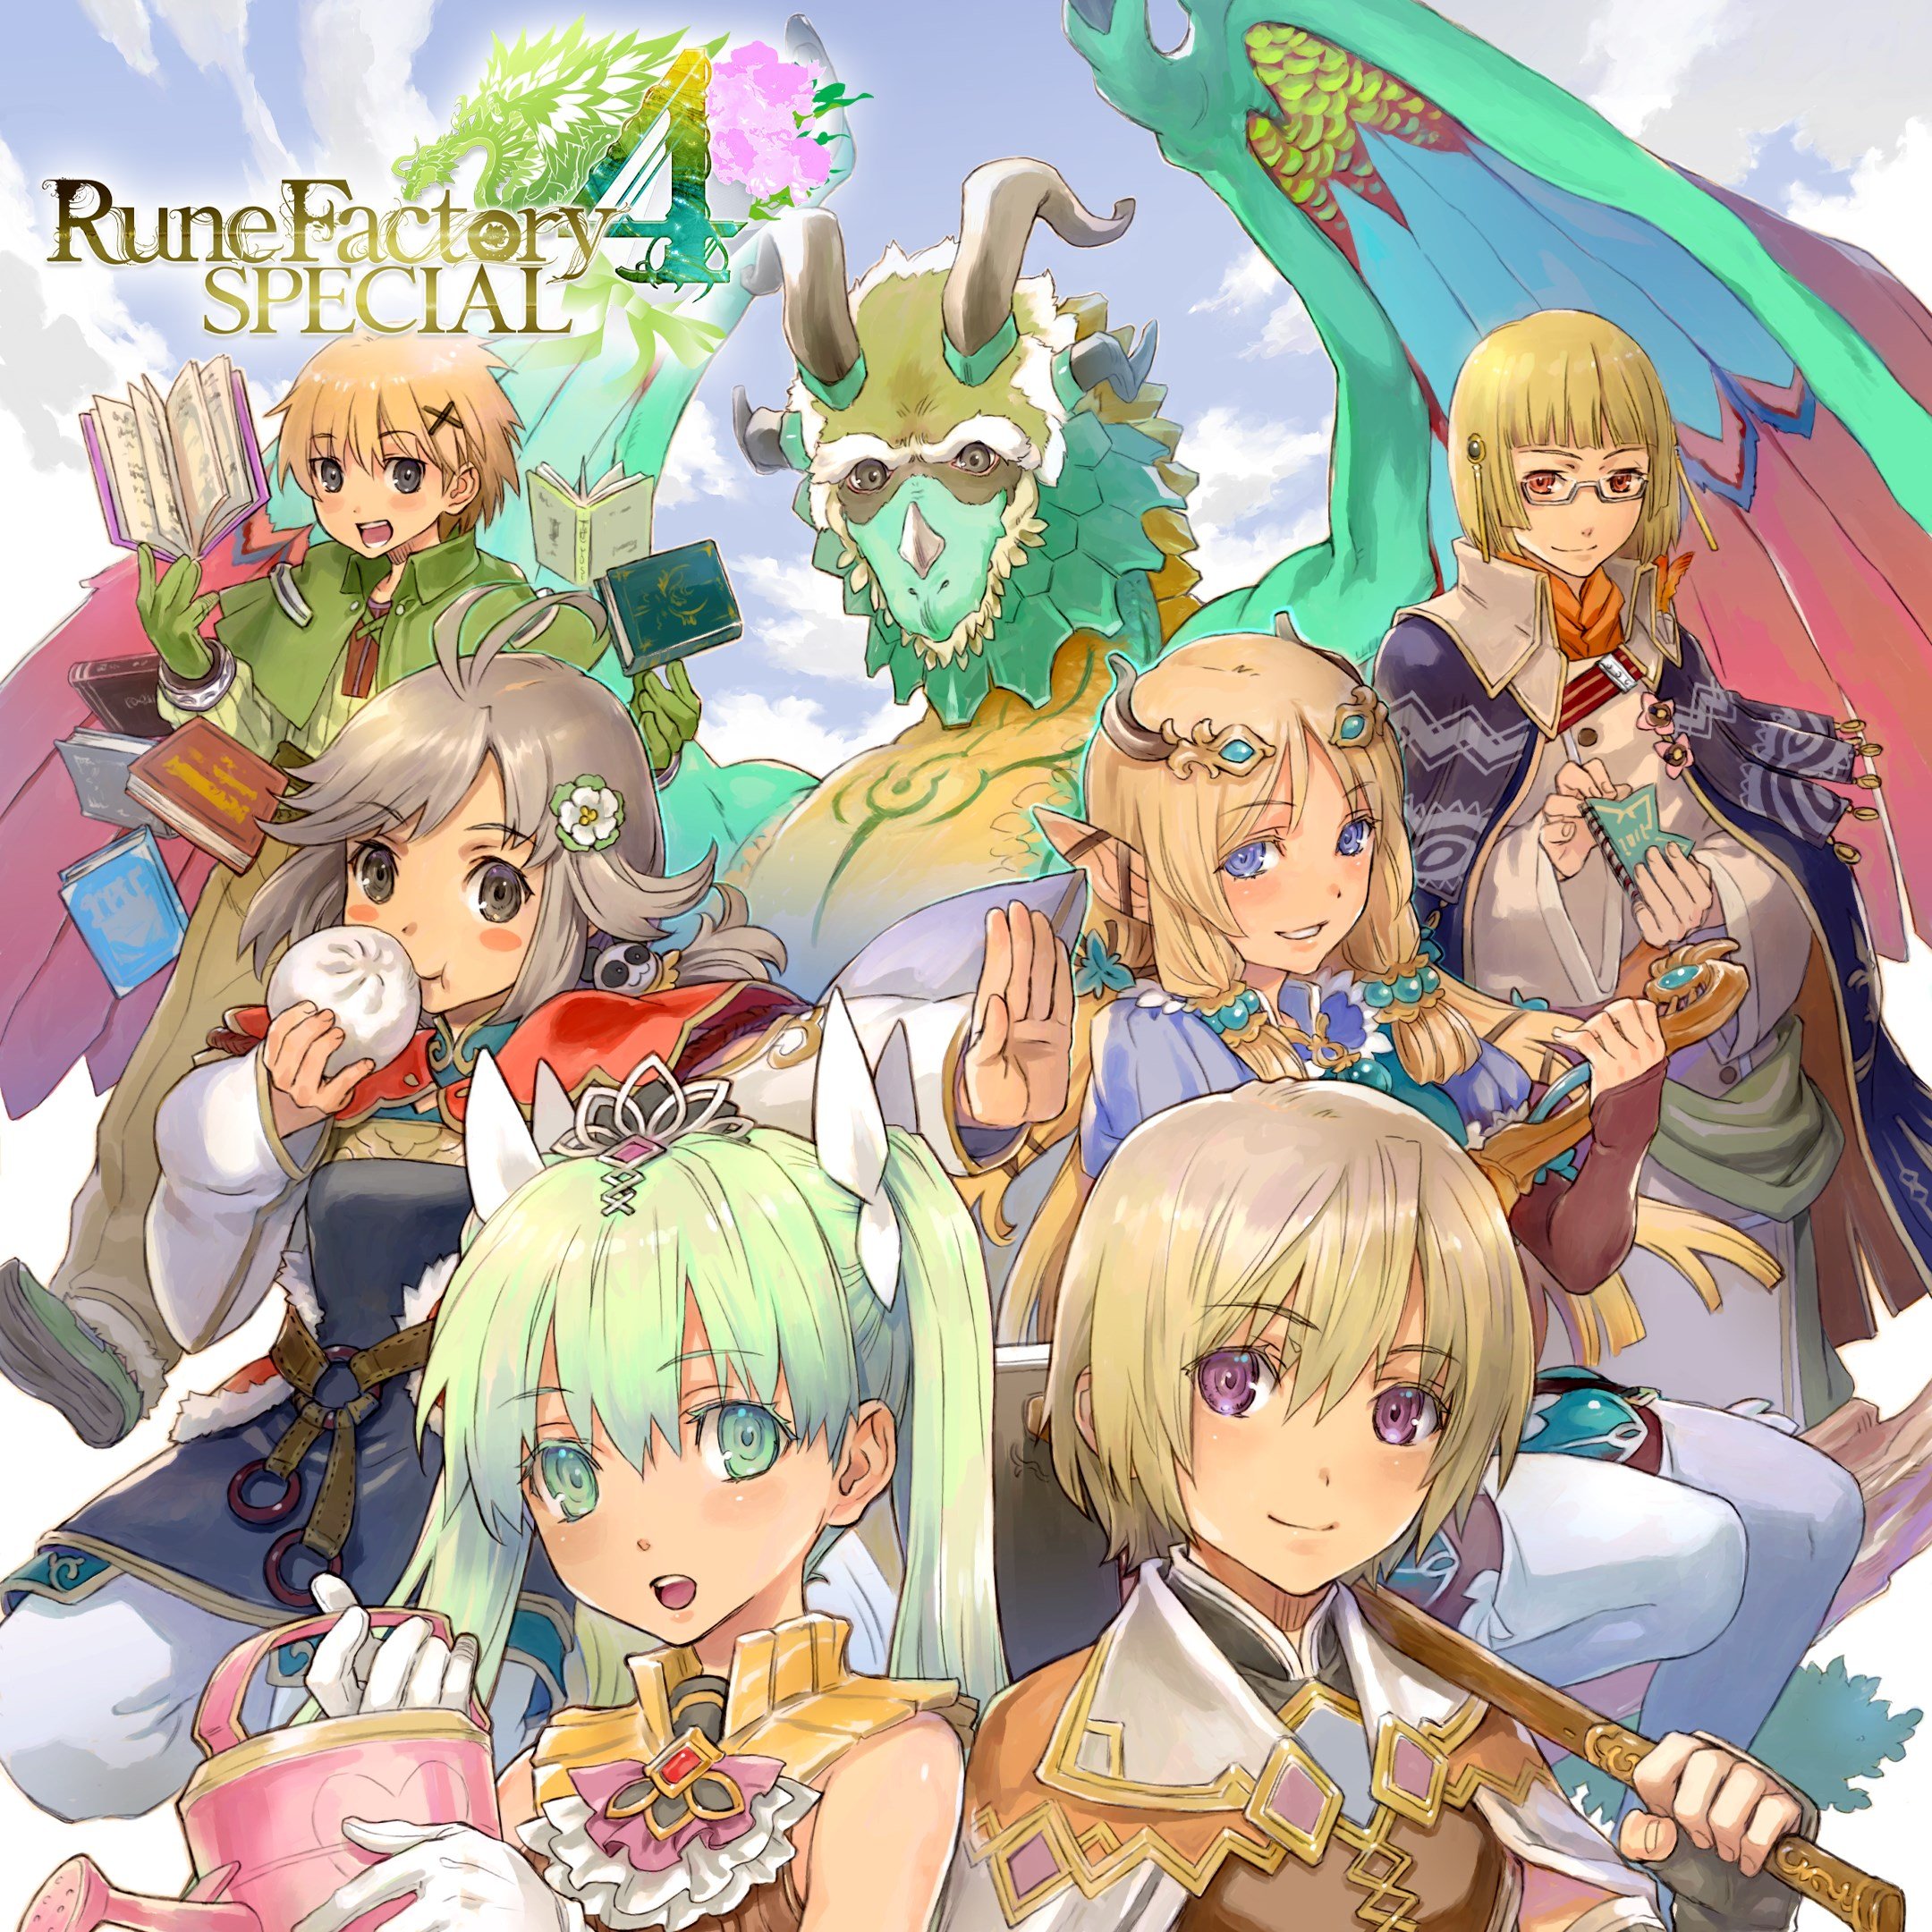 Rune Factory 4 Special - Windows Edition